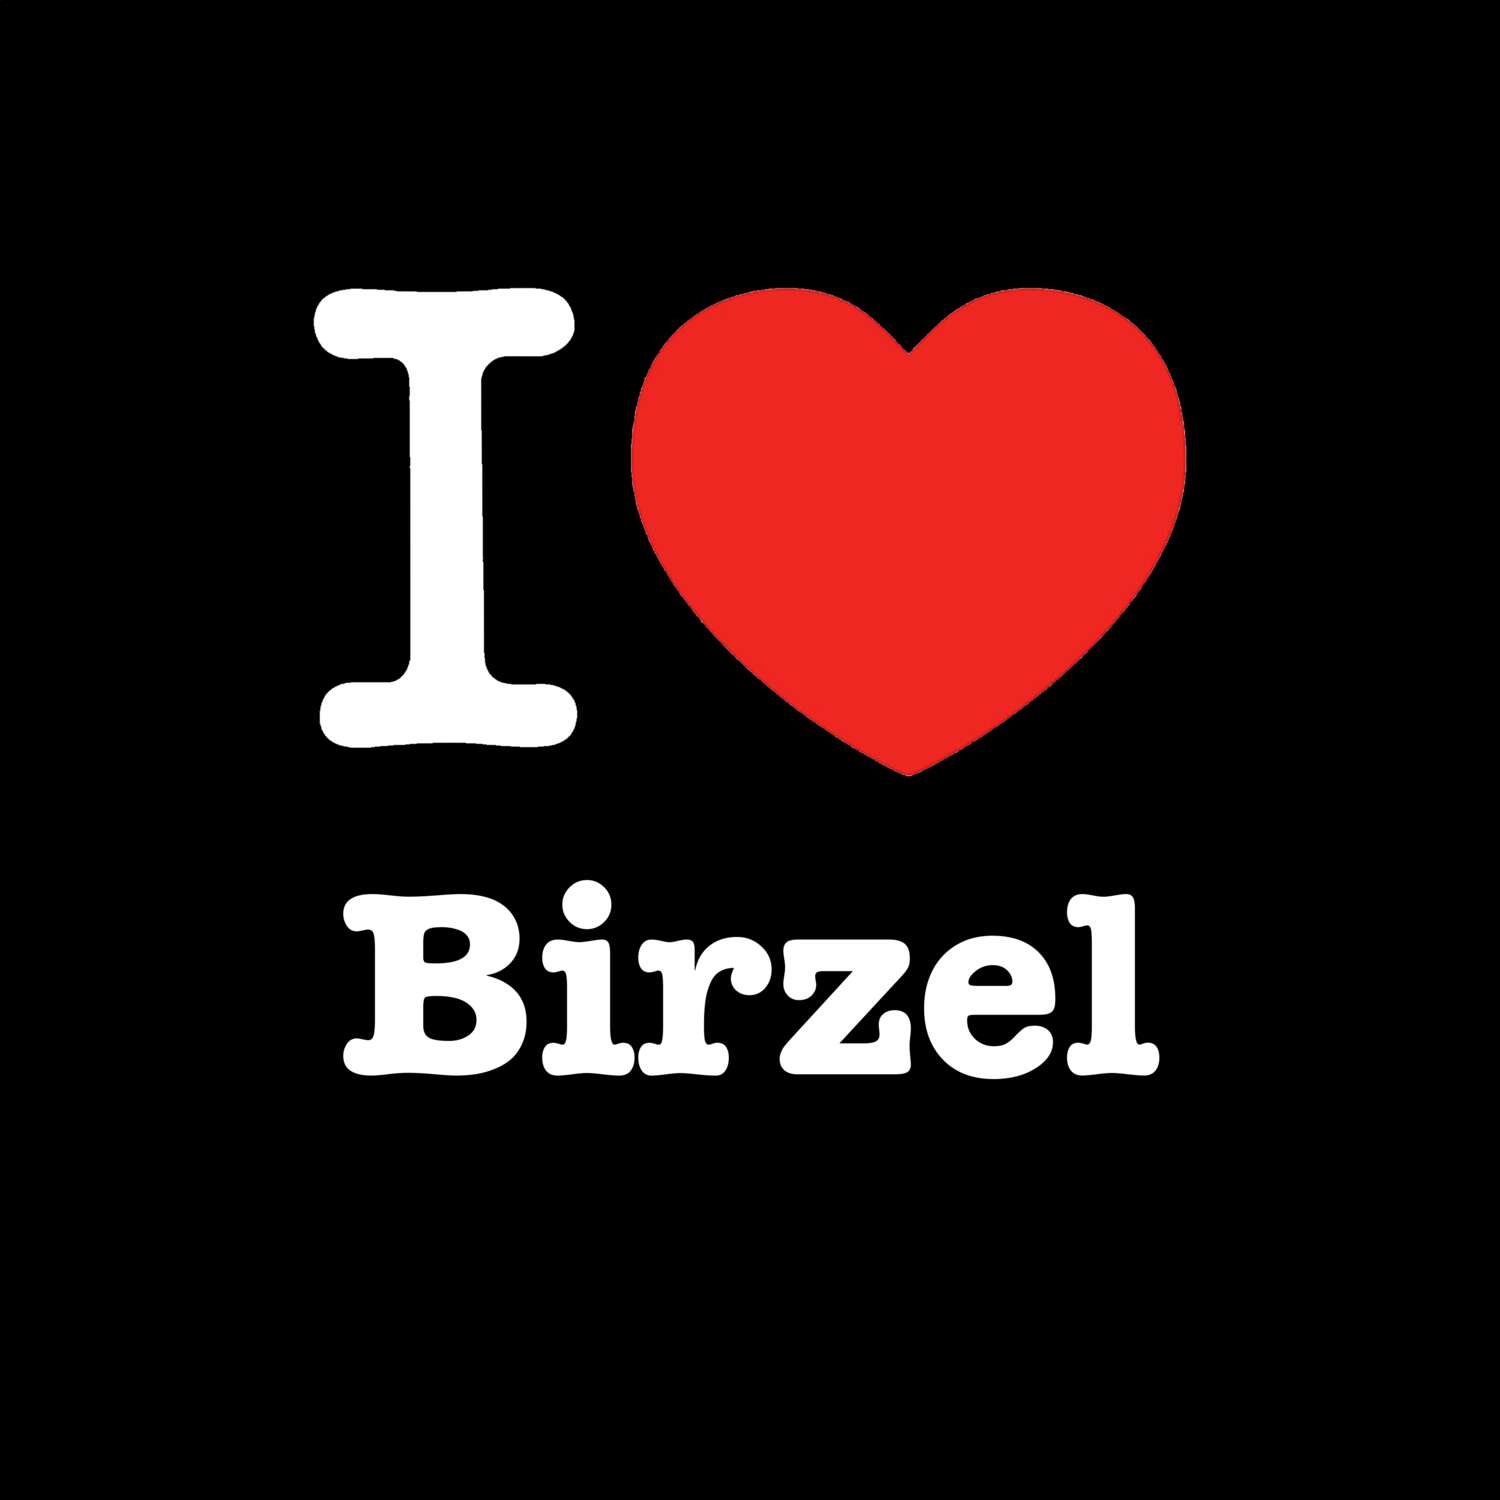 Birzel T-Shirt »I love«